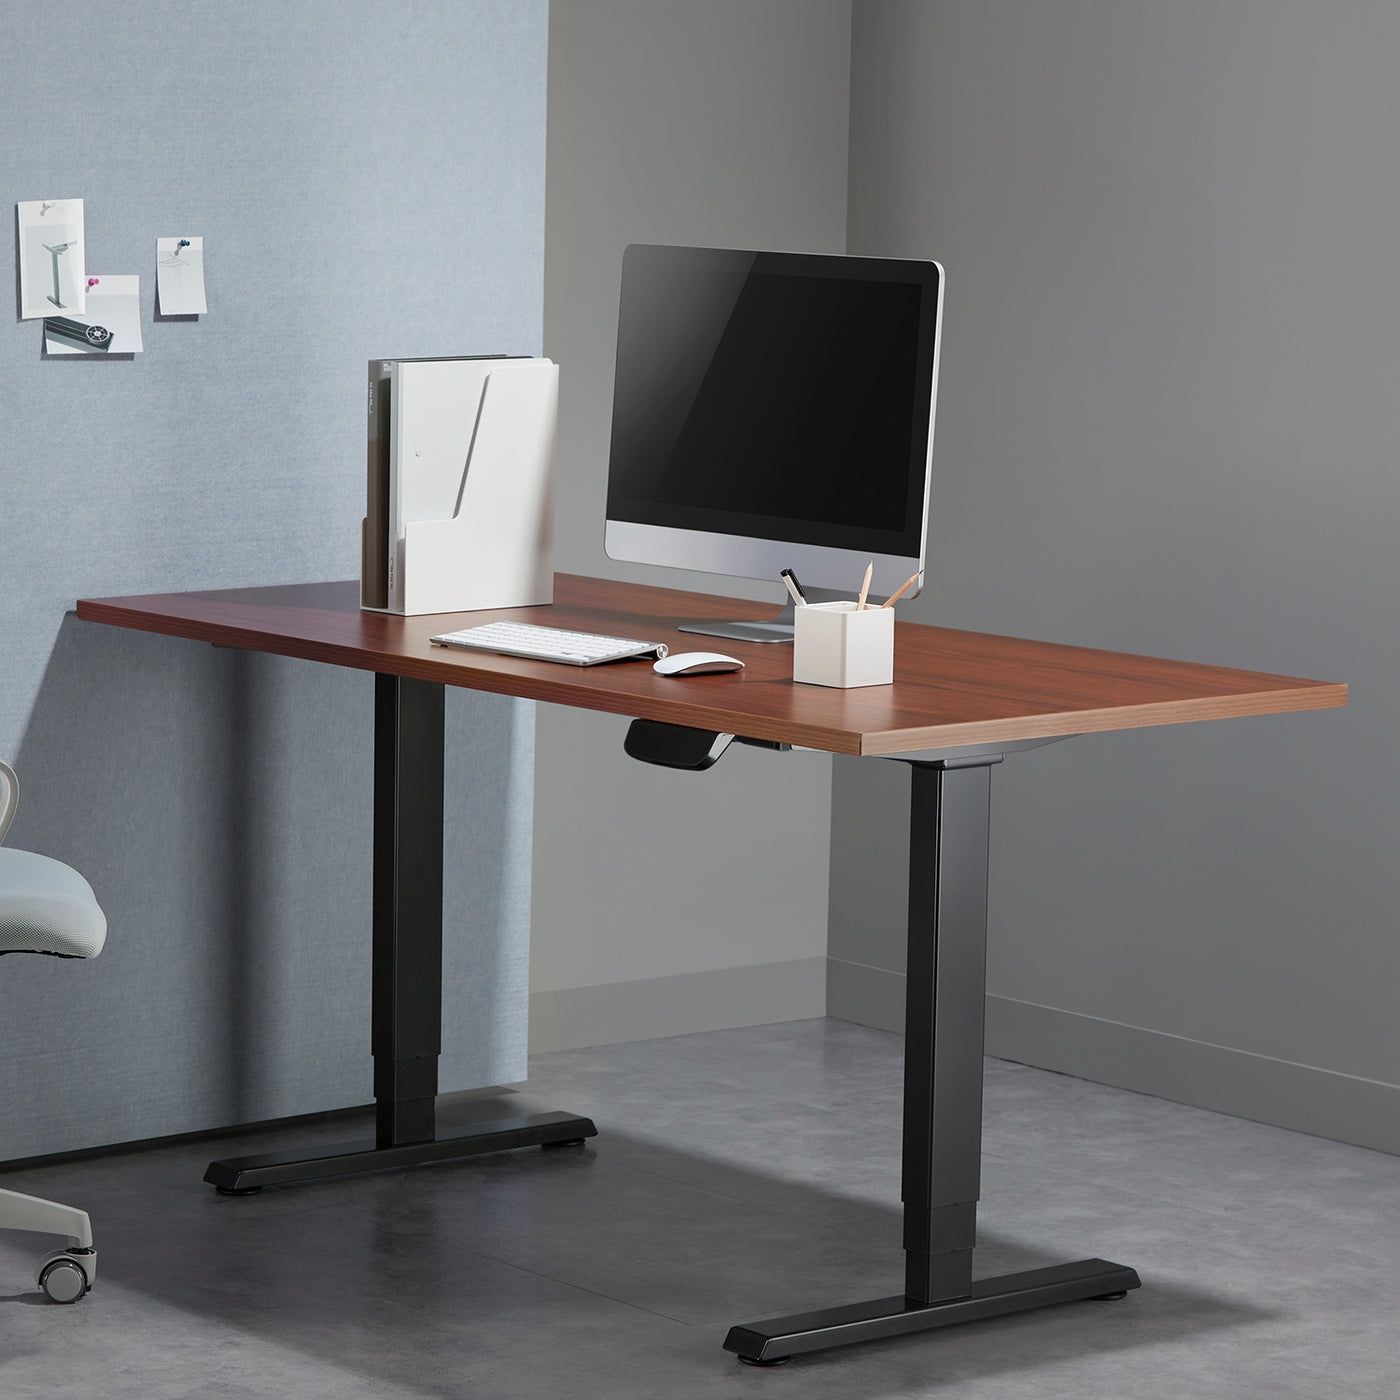 Escritorio eléctrico Ergo Office sin tablero, para trabajar de pie o sentado, máx. 125kg, altura máxima 1280mm, panel táctil, ER-422